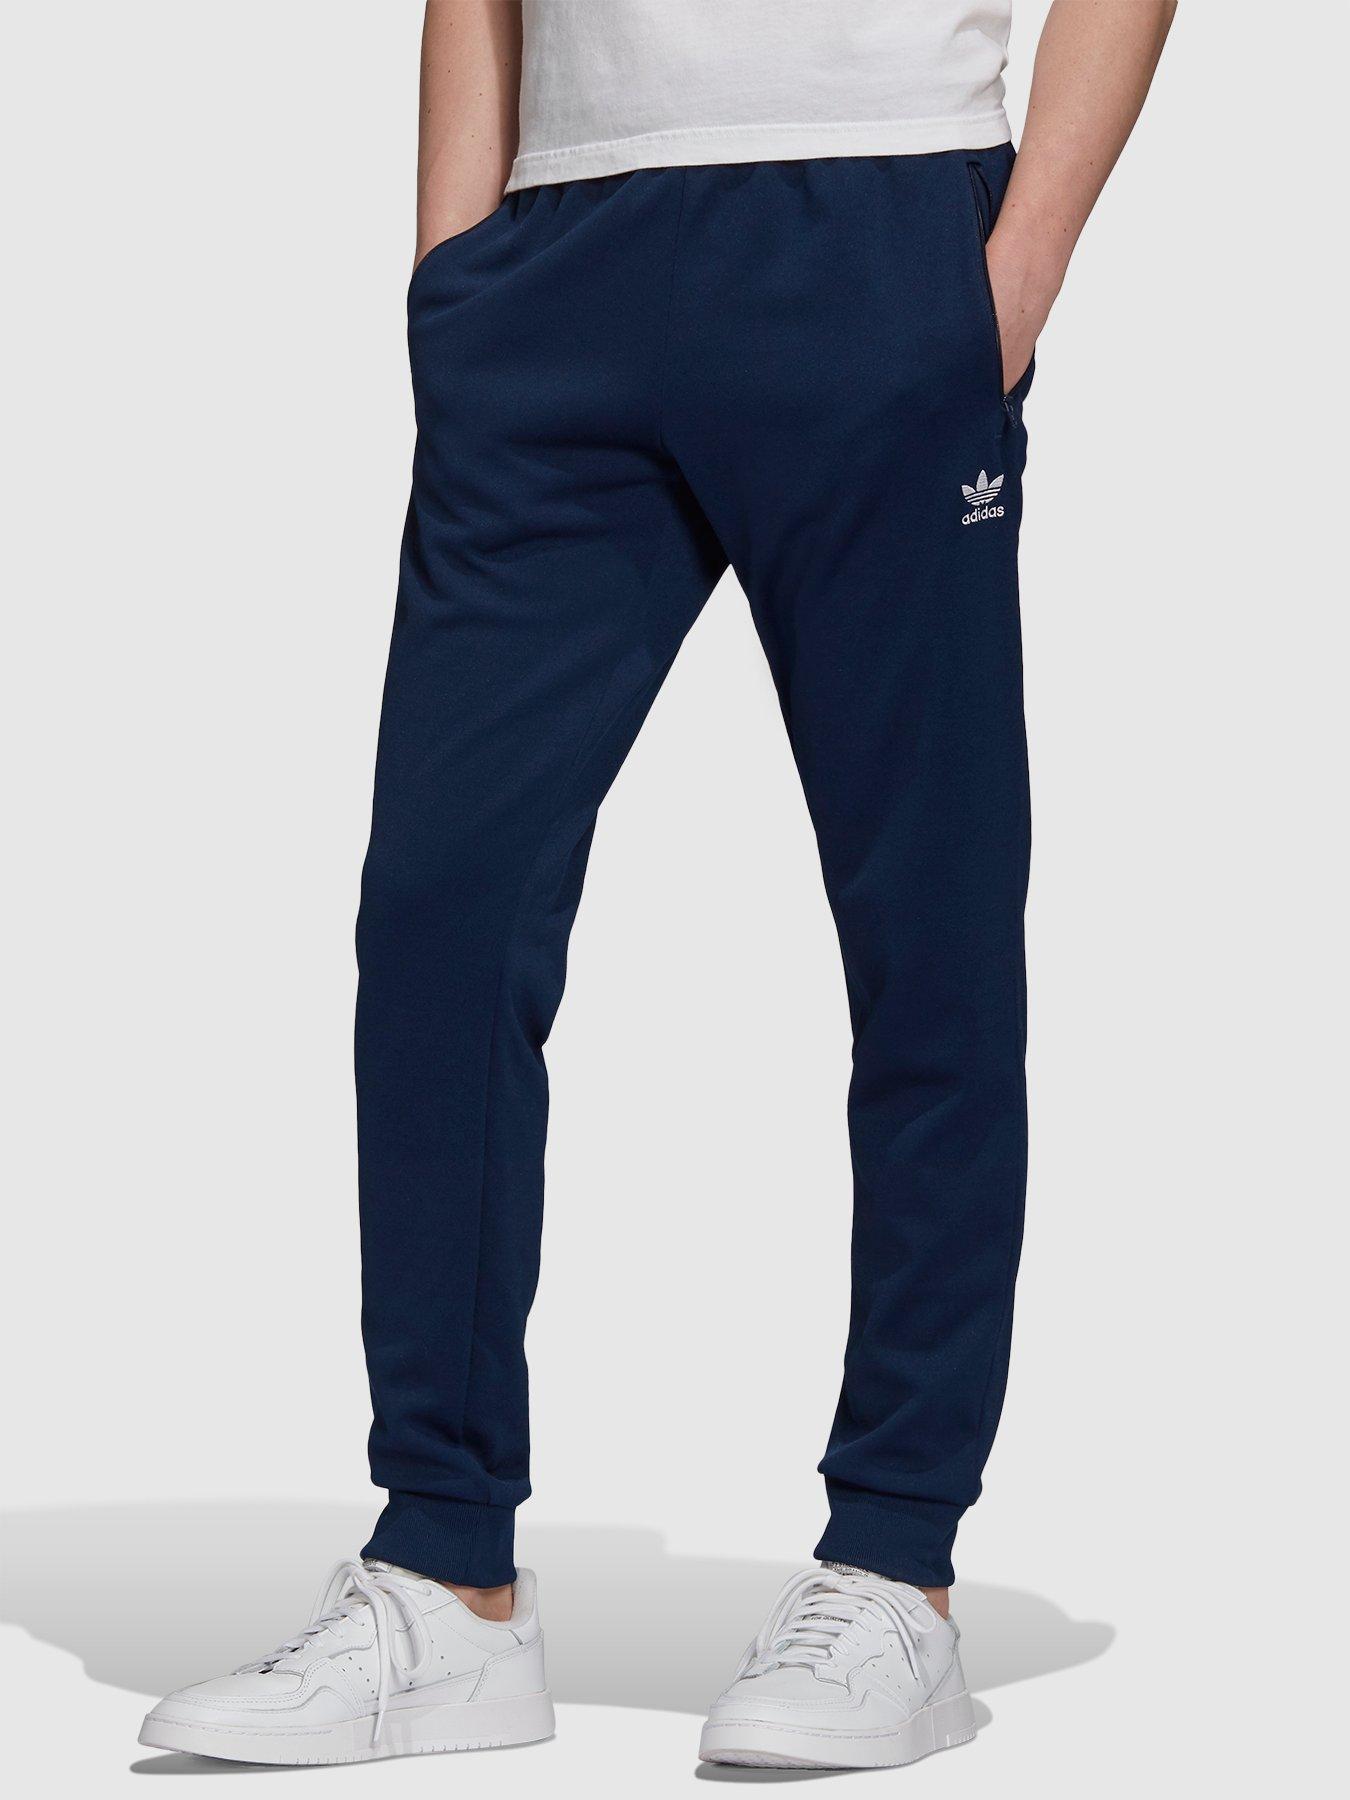 navy blue adidas joggers